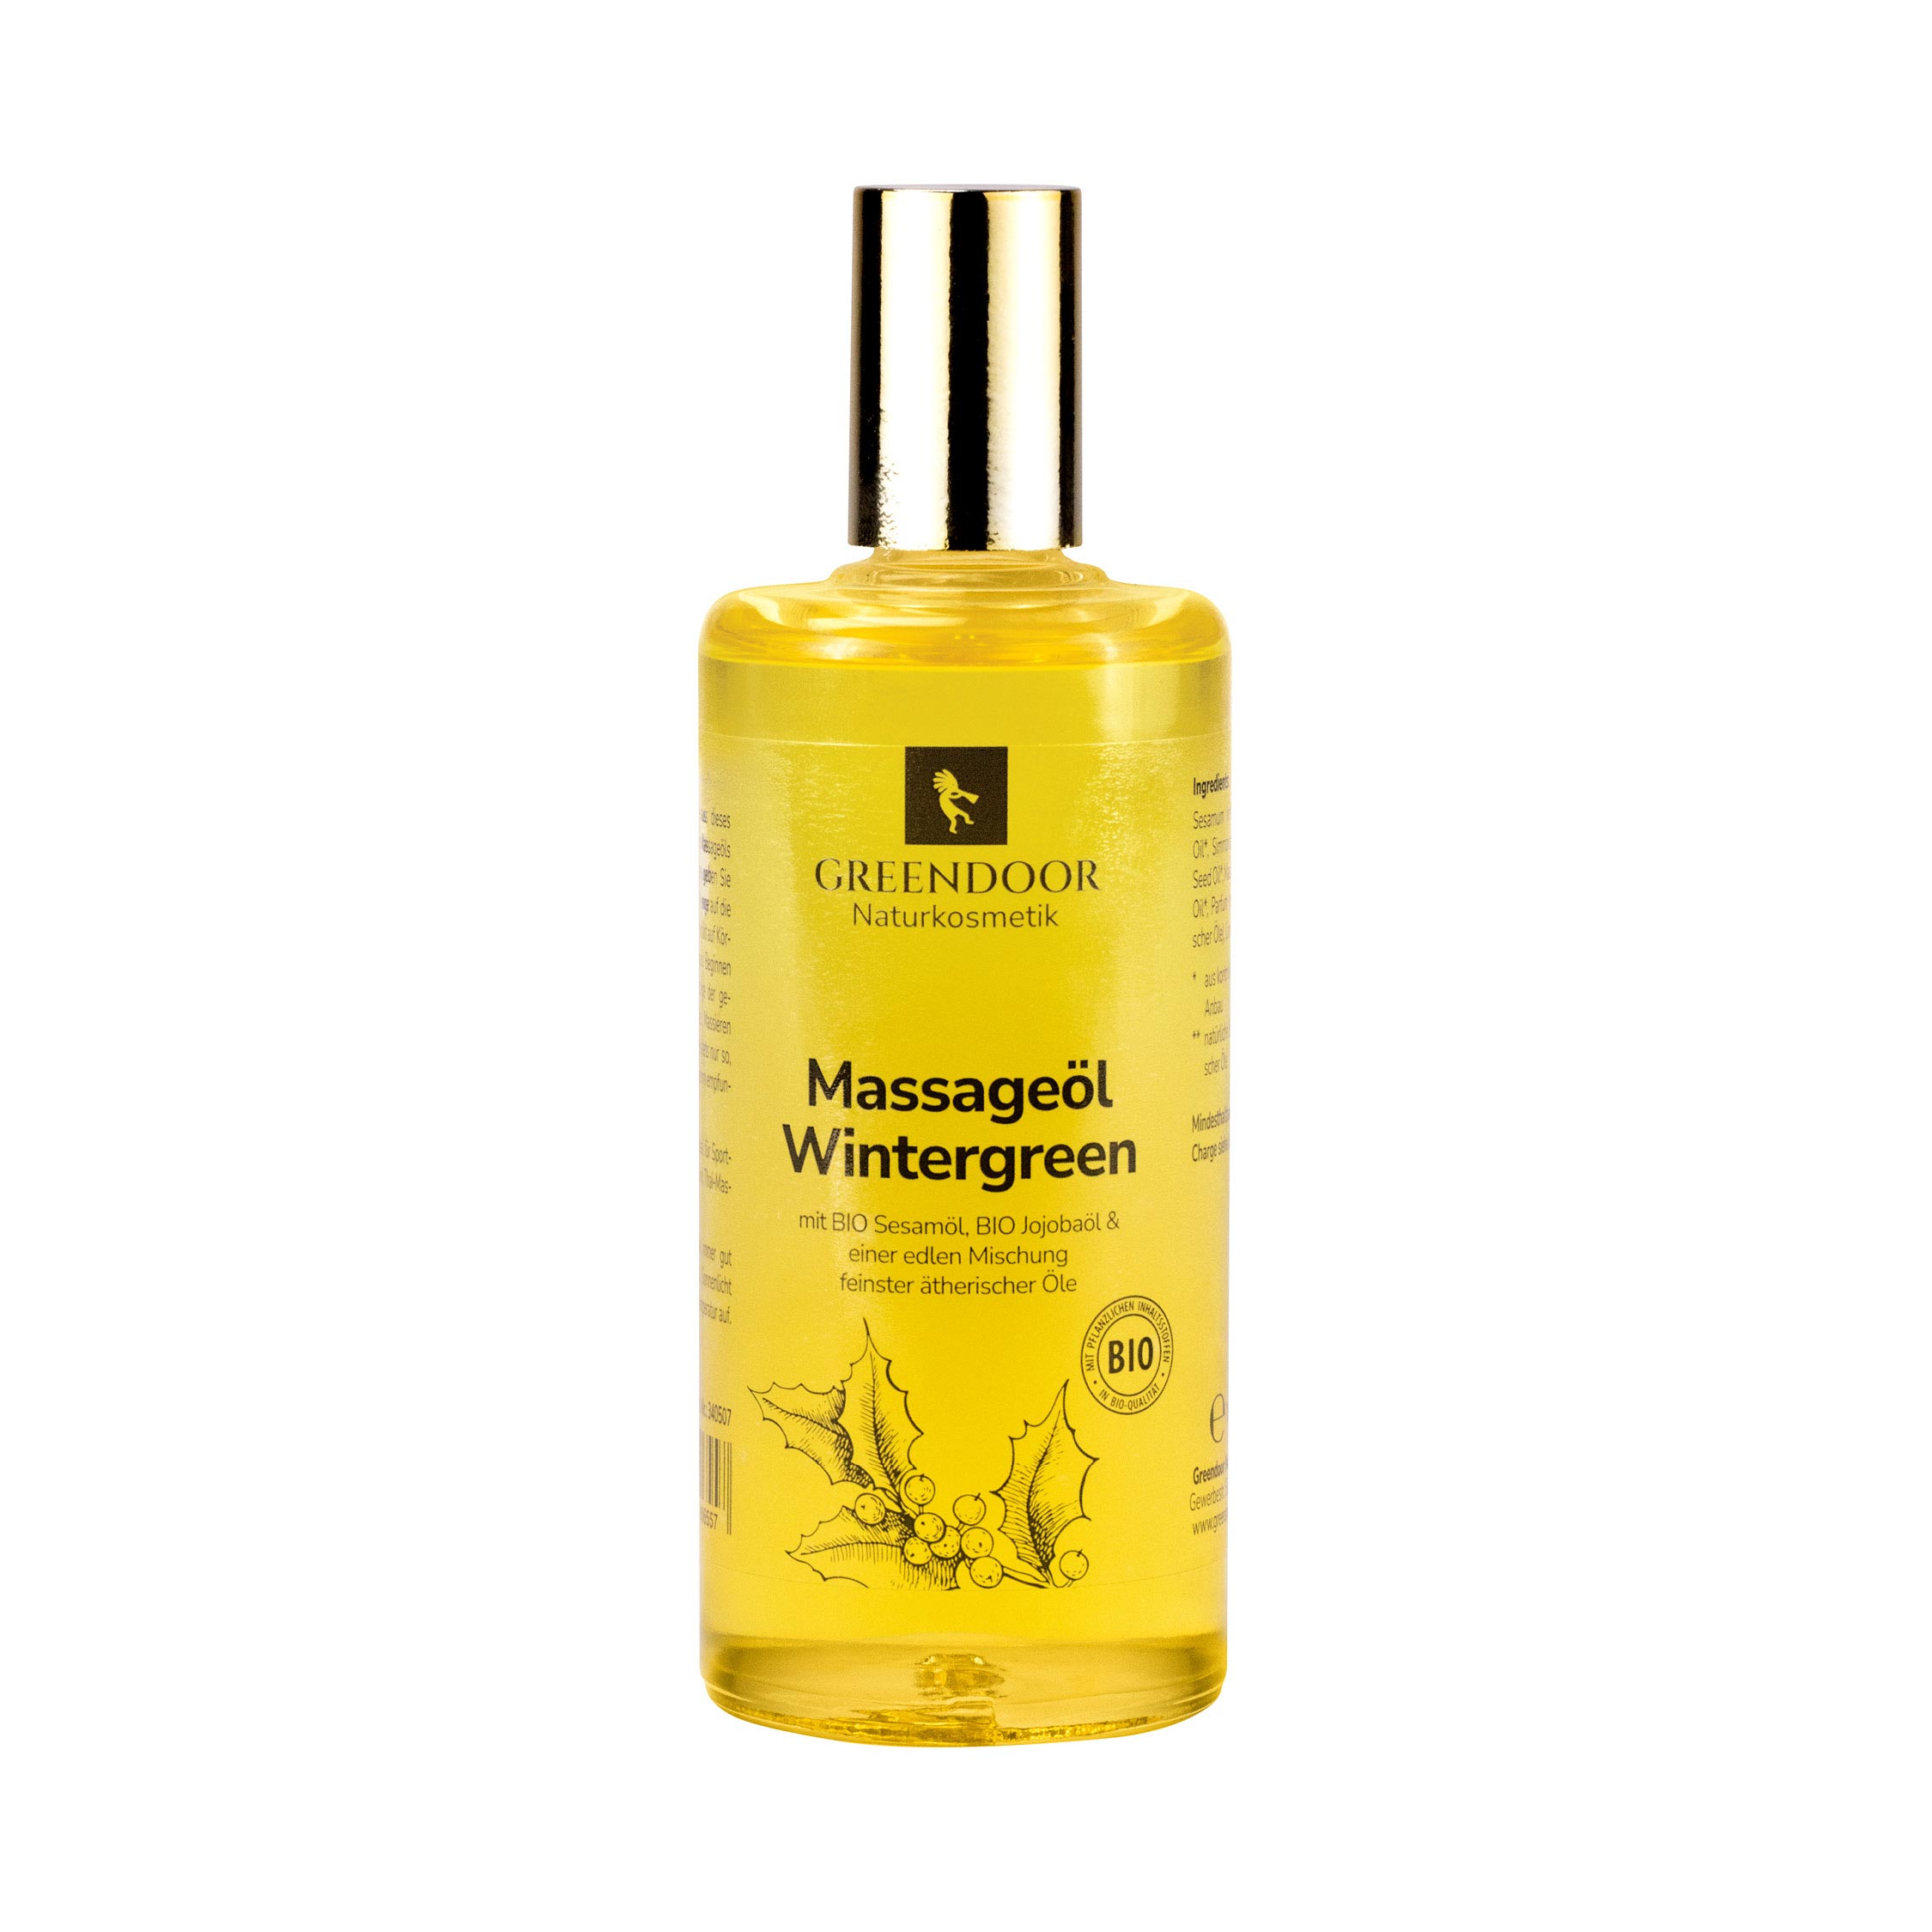 Massageöl Wintergreen 100ml, vegan, Naturkosmetik Massage Öl mit reinen ätherischen Ölen 